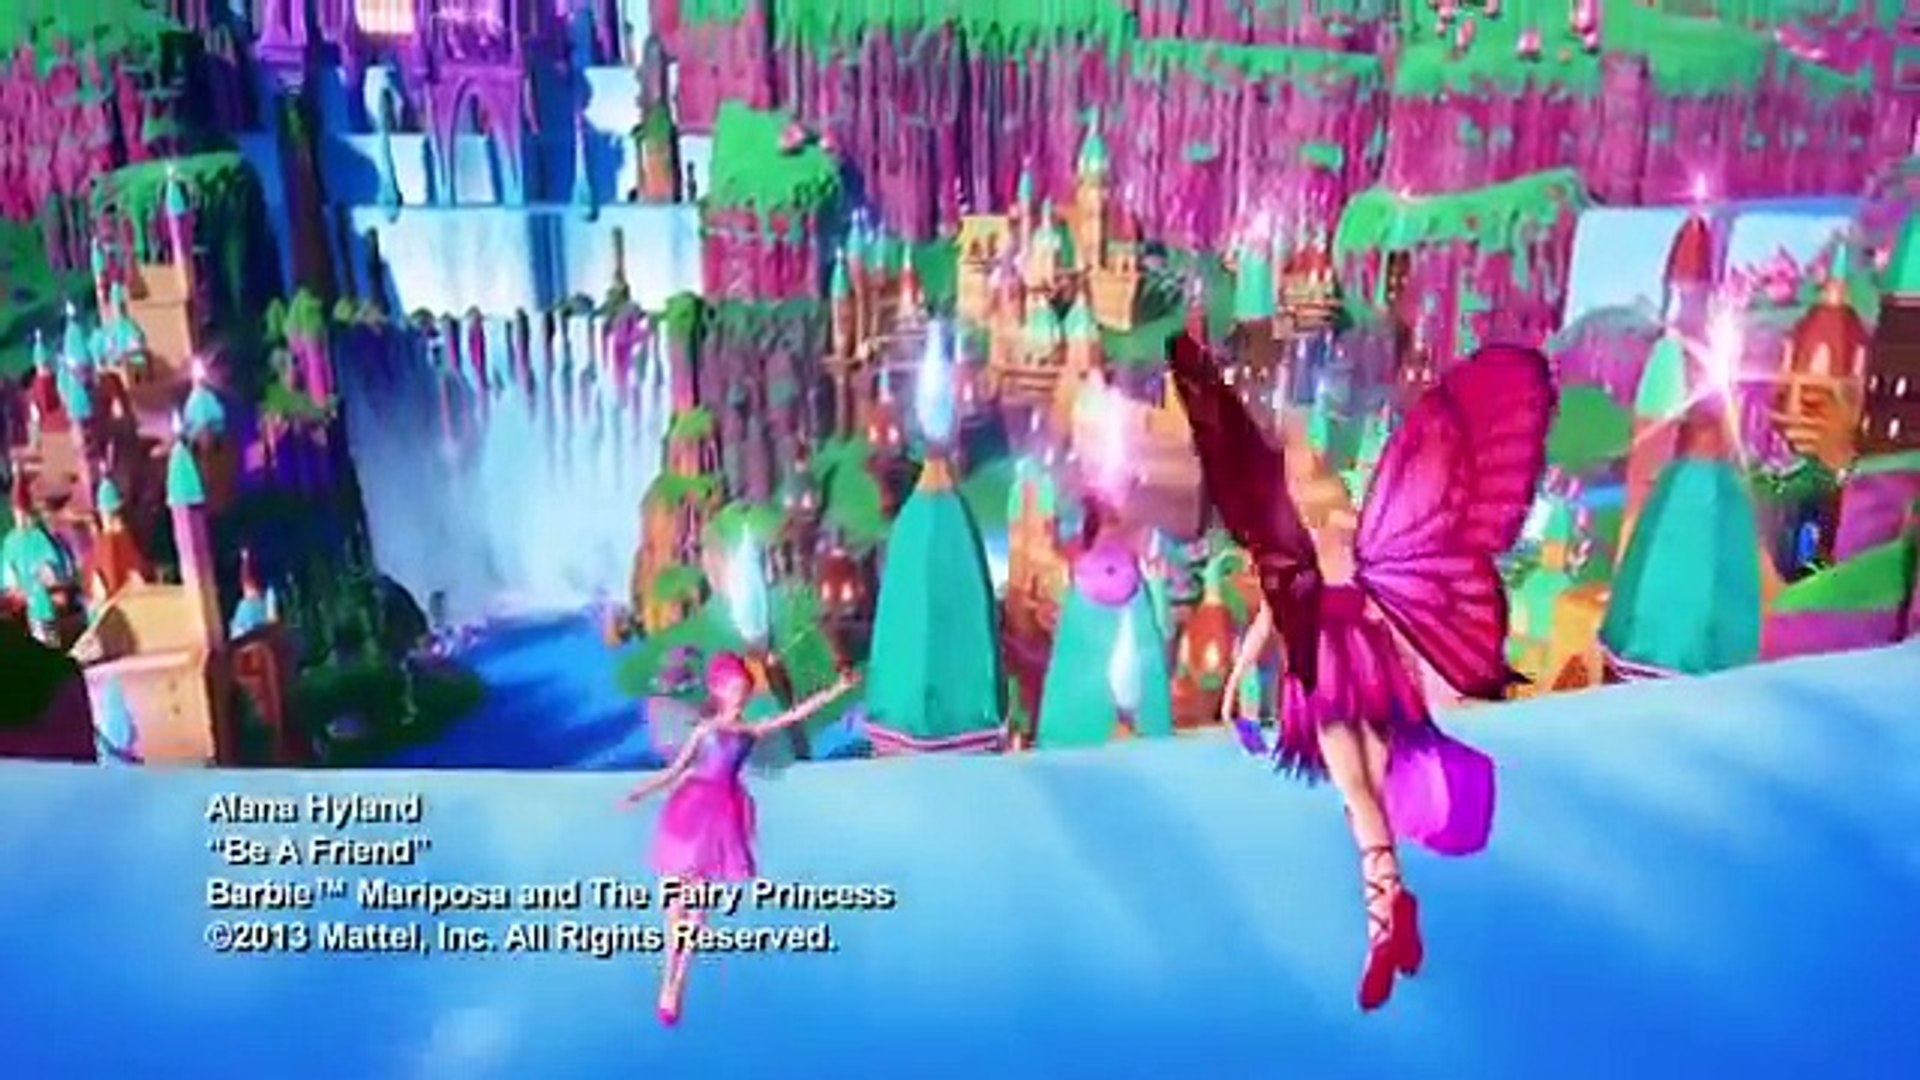 Barbie™: Mariposa & the Fairy Princess: Be A Friend - Music Video - video  Dailymotion